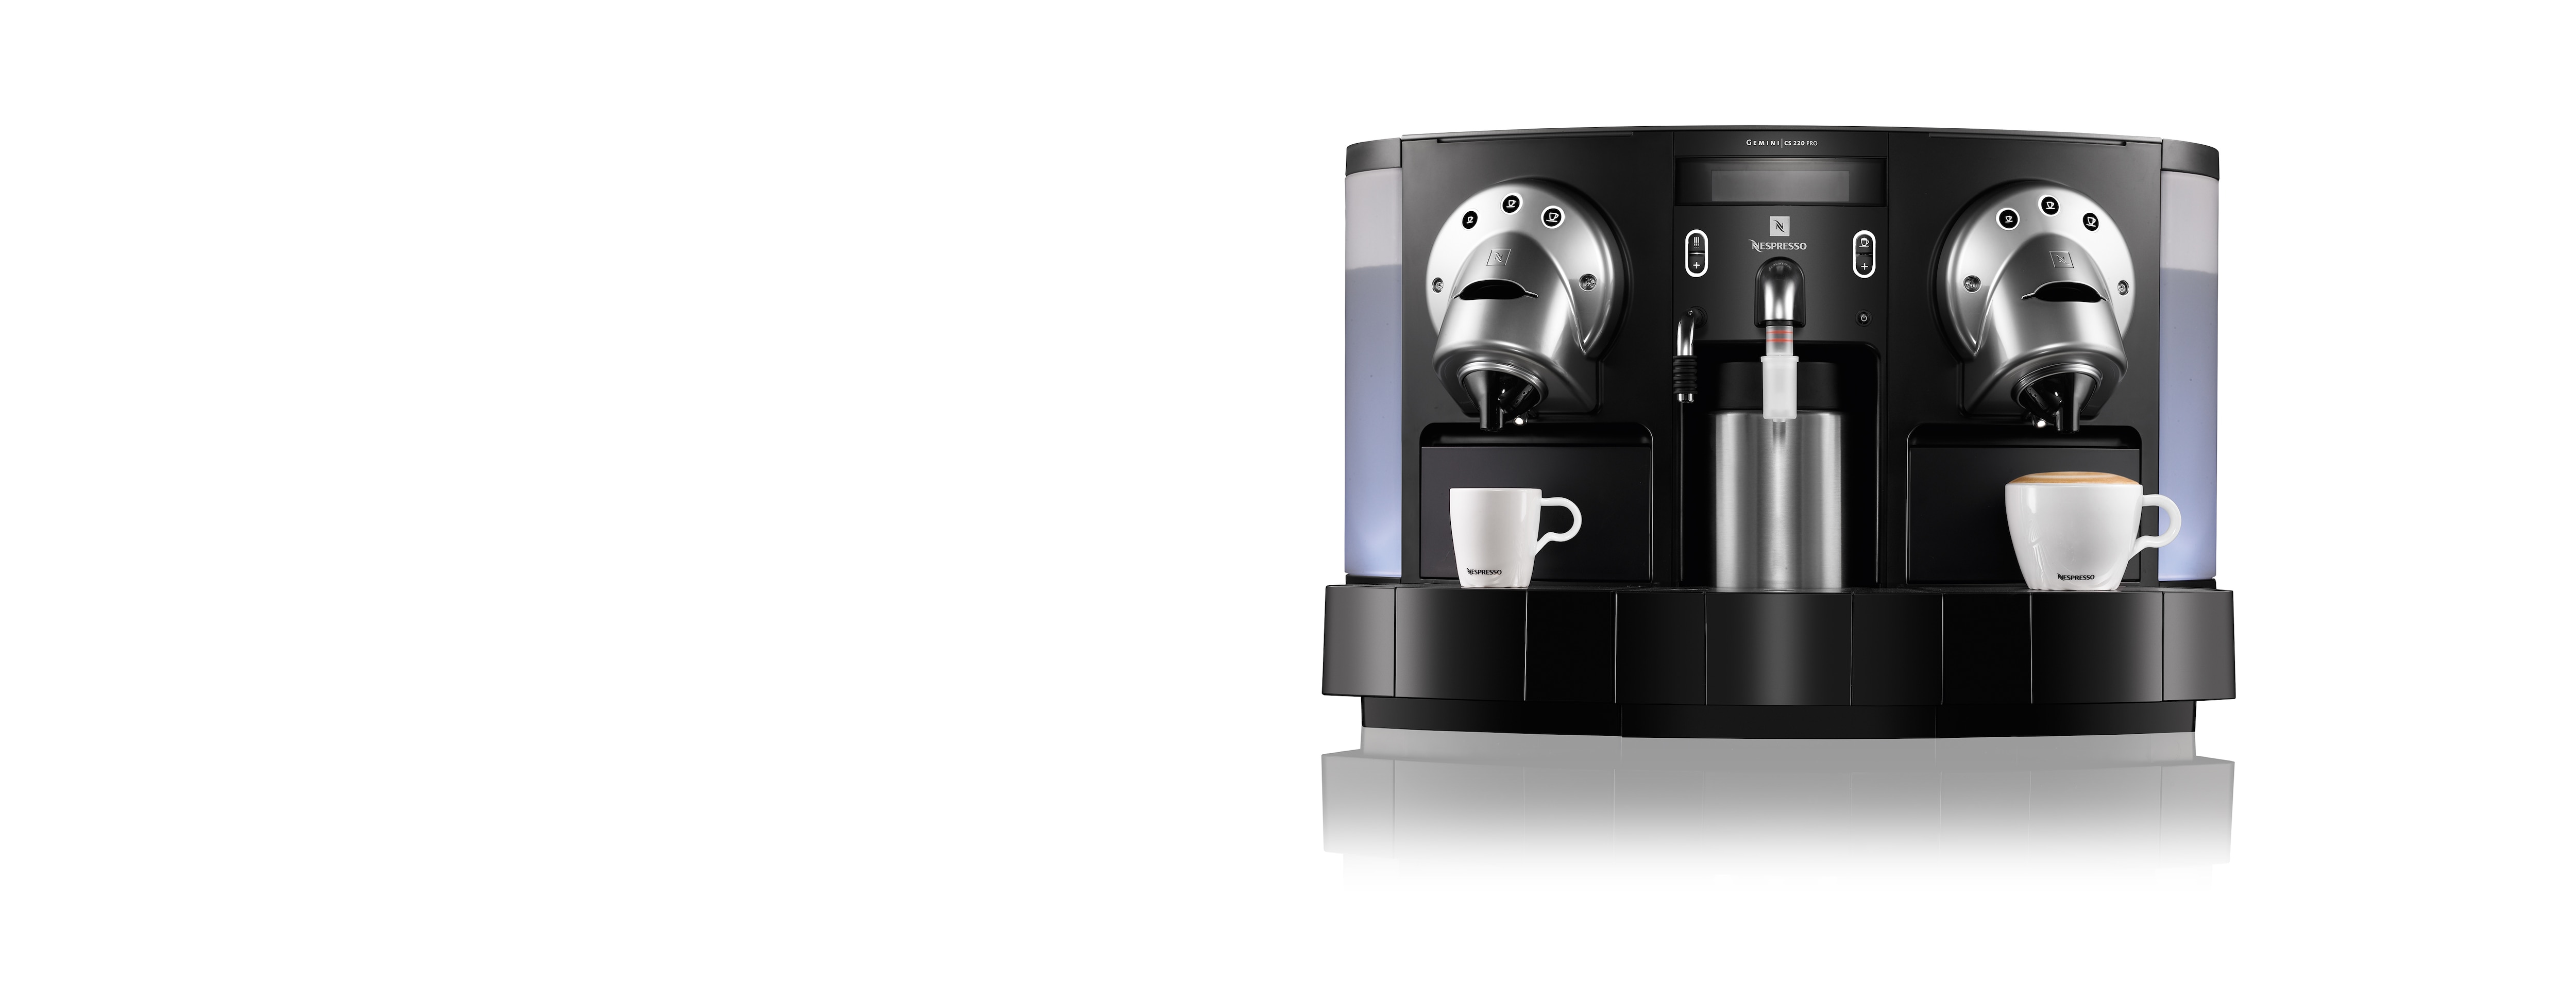 Gemini 221 Coffee Machine | Nespresso Pro